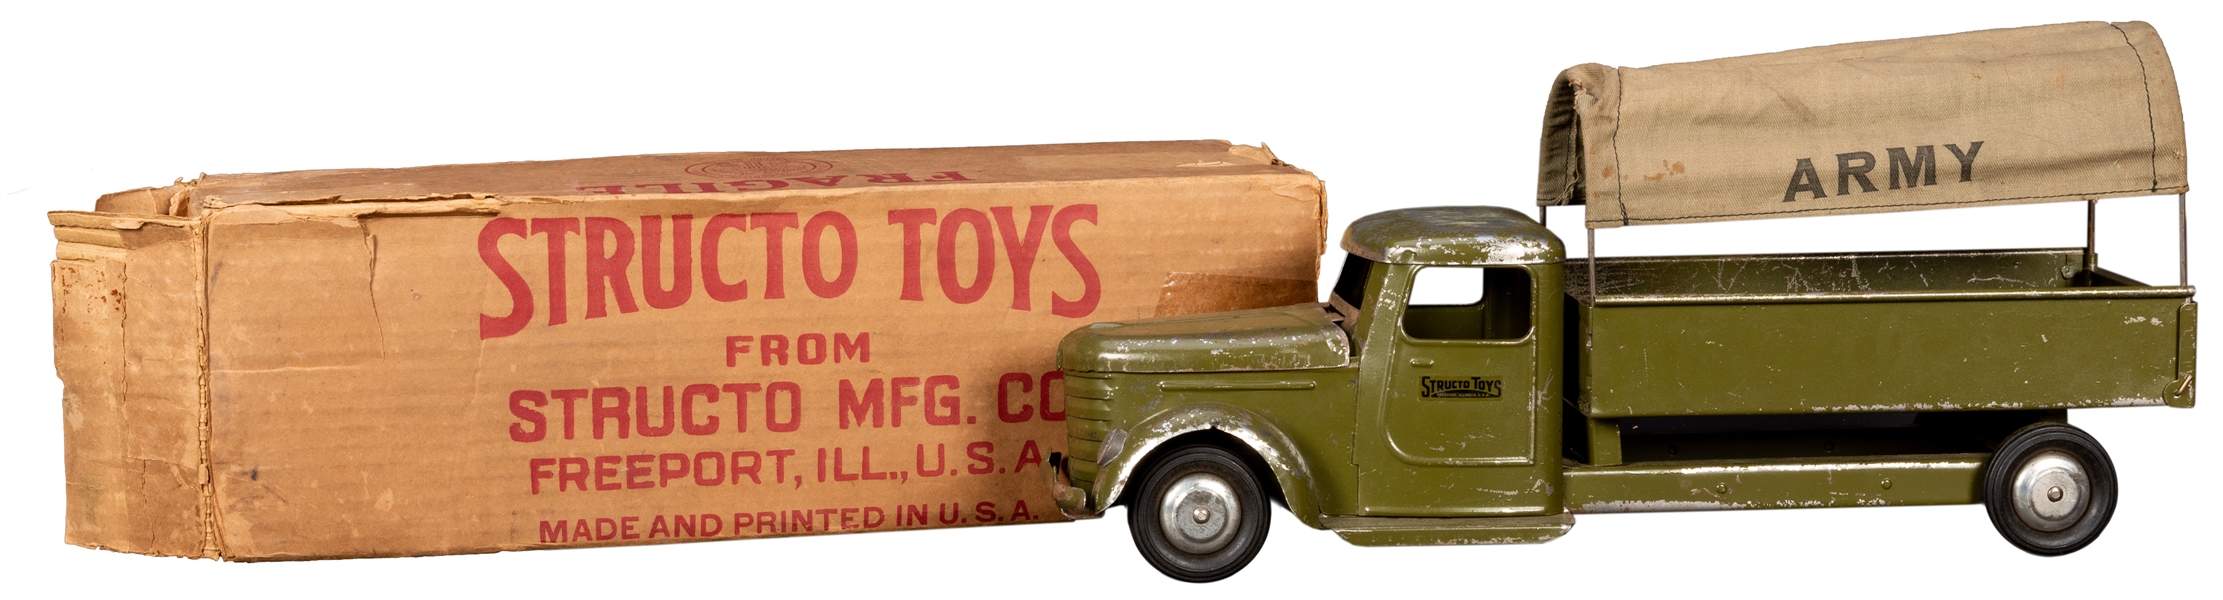  Structo Diamond T U.S. Army Canvas Top Transport Truck in Original Box. 1939.